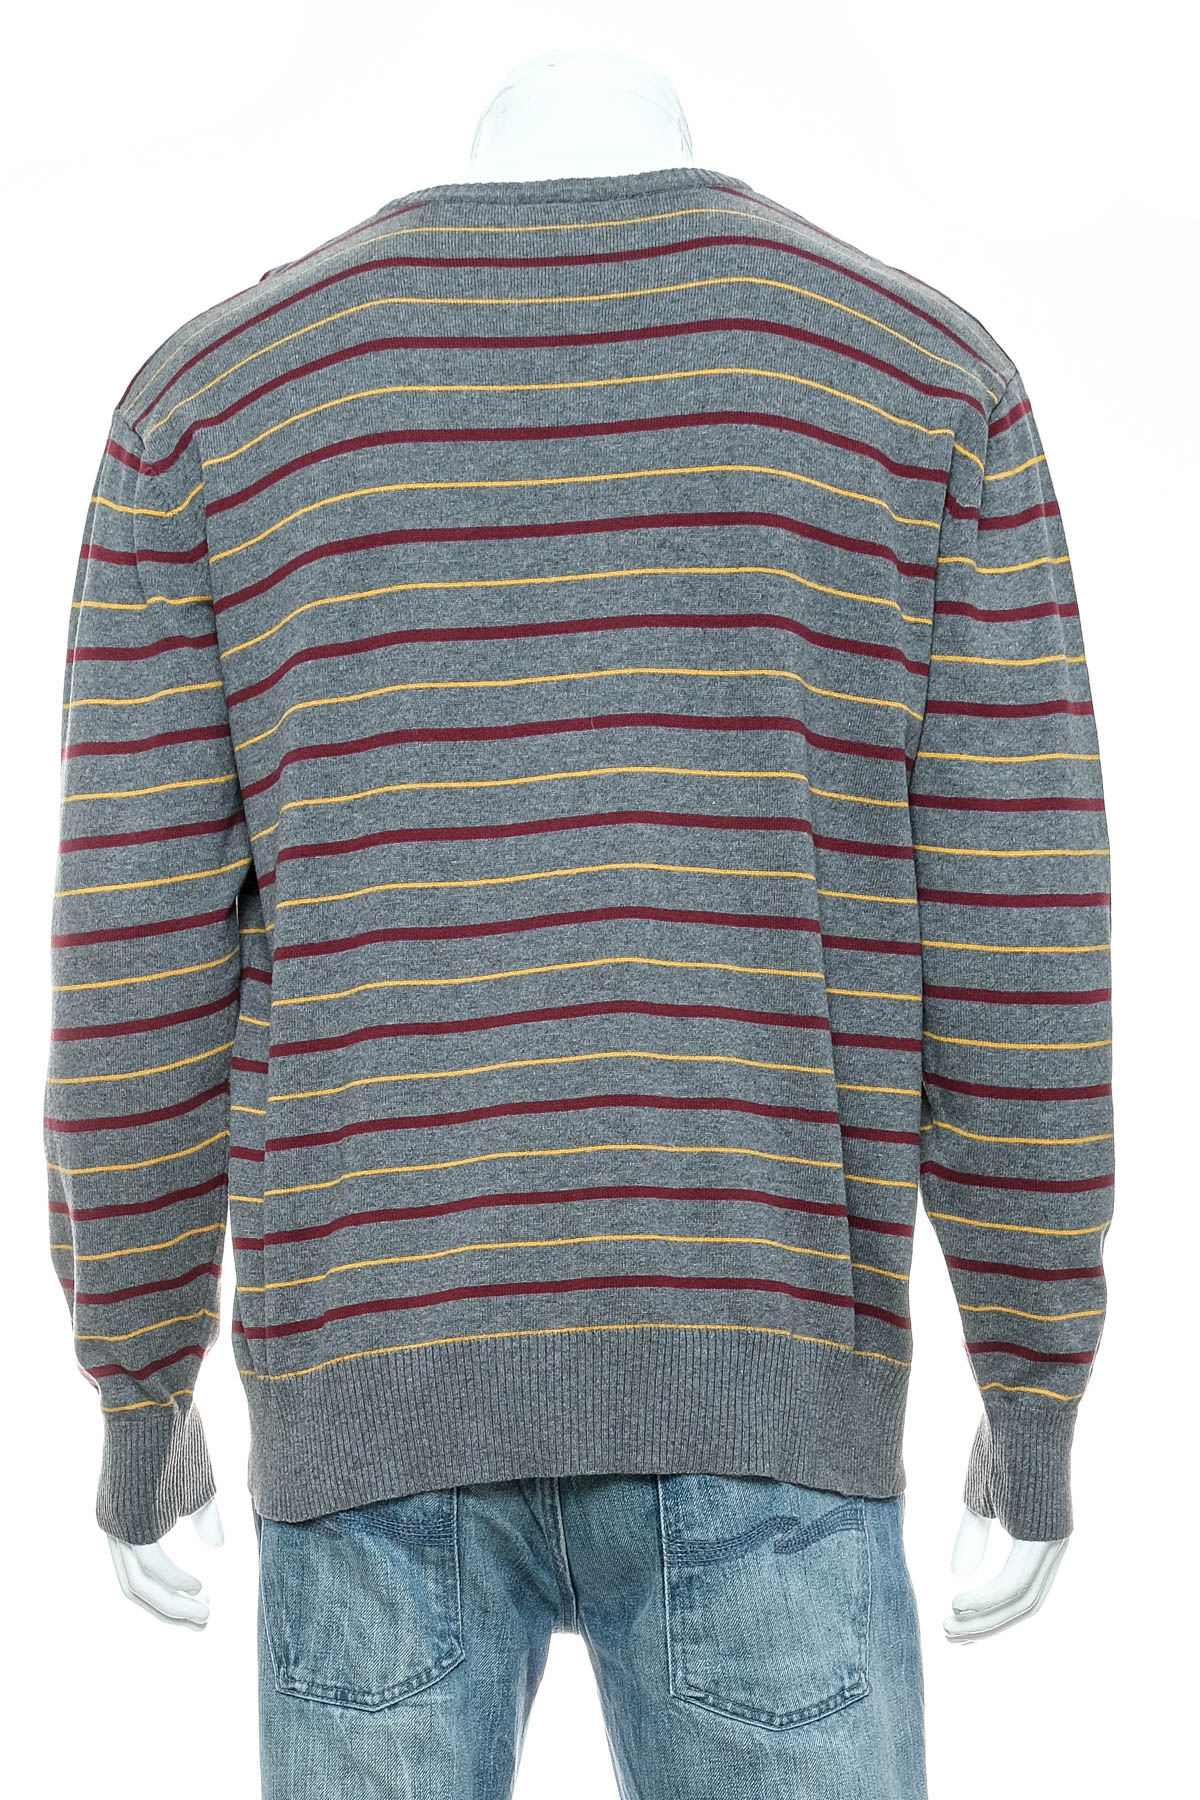 Men's sweater - REWARD FASHION - 1